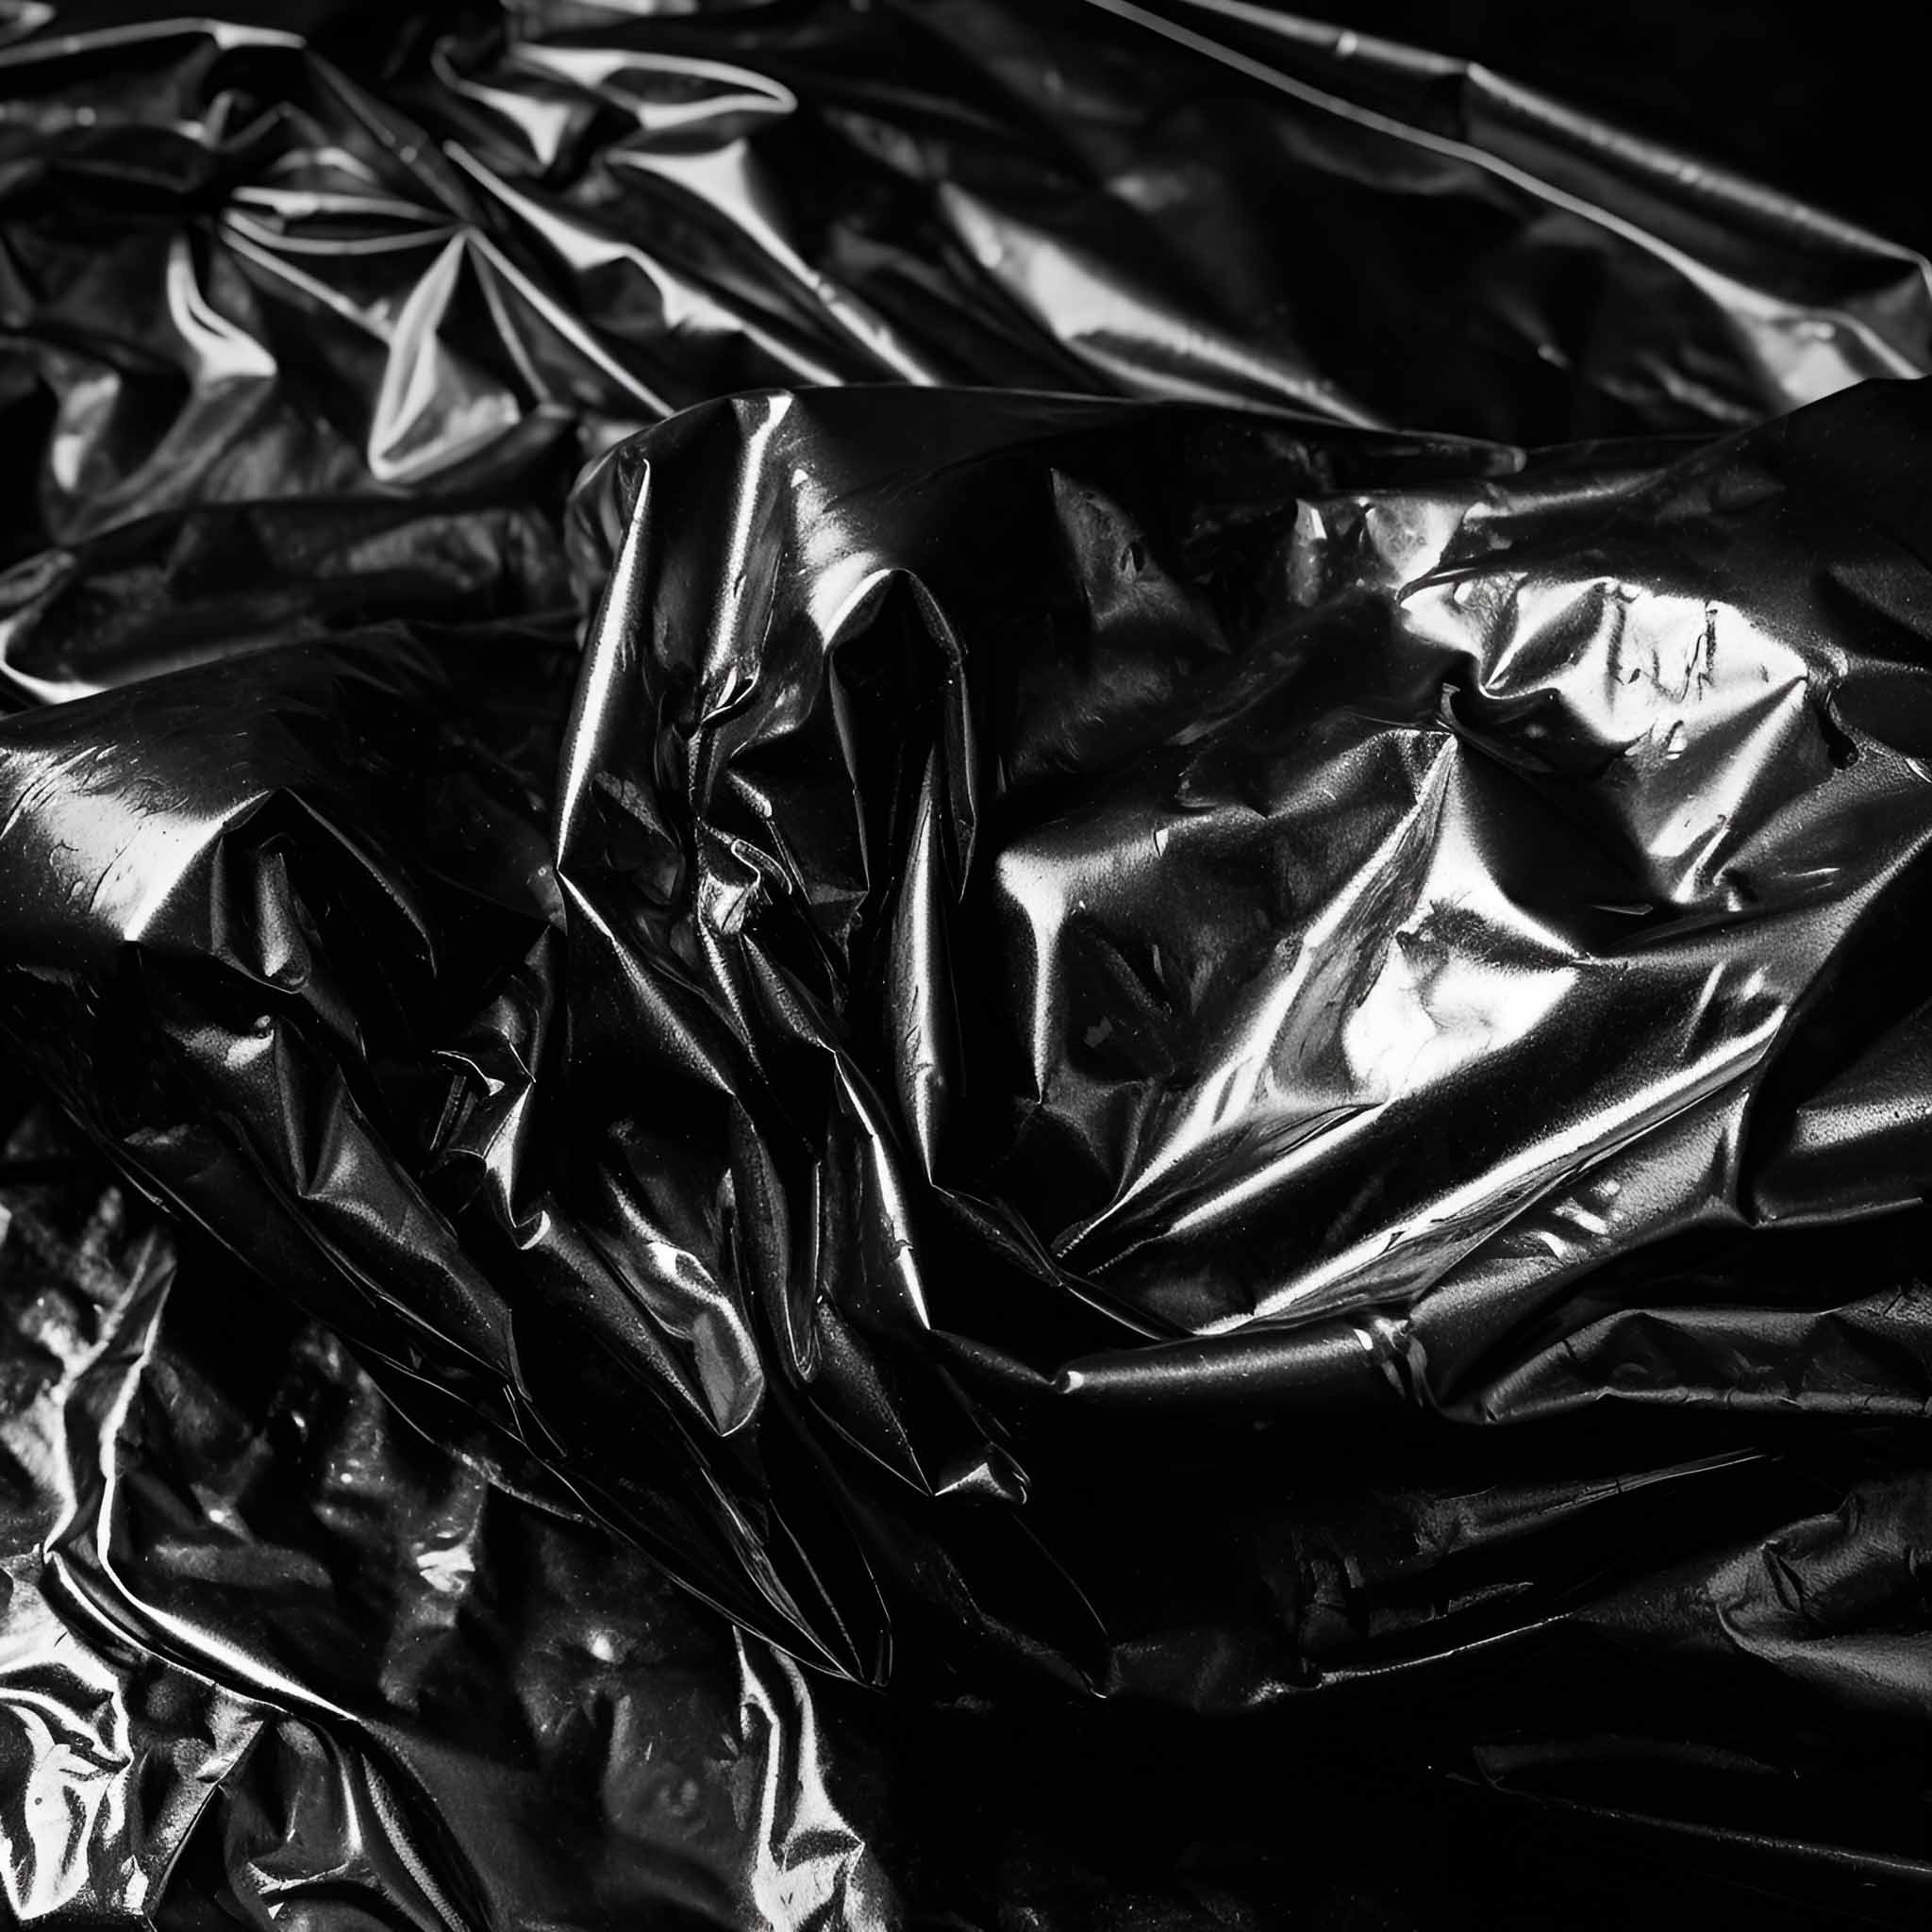 Black Foil Shiny Textures cover image.